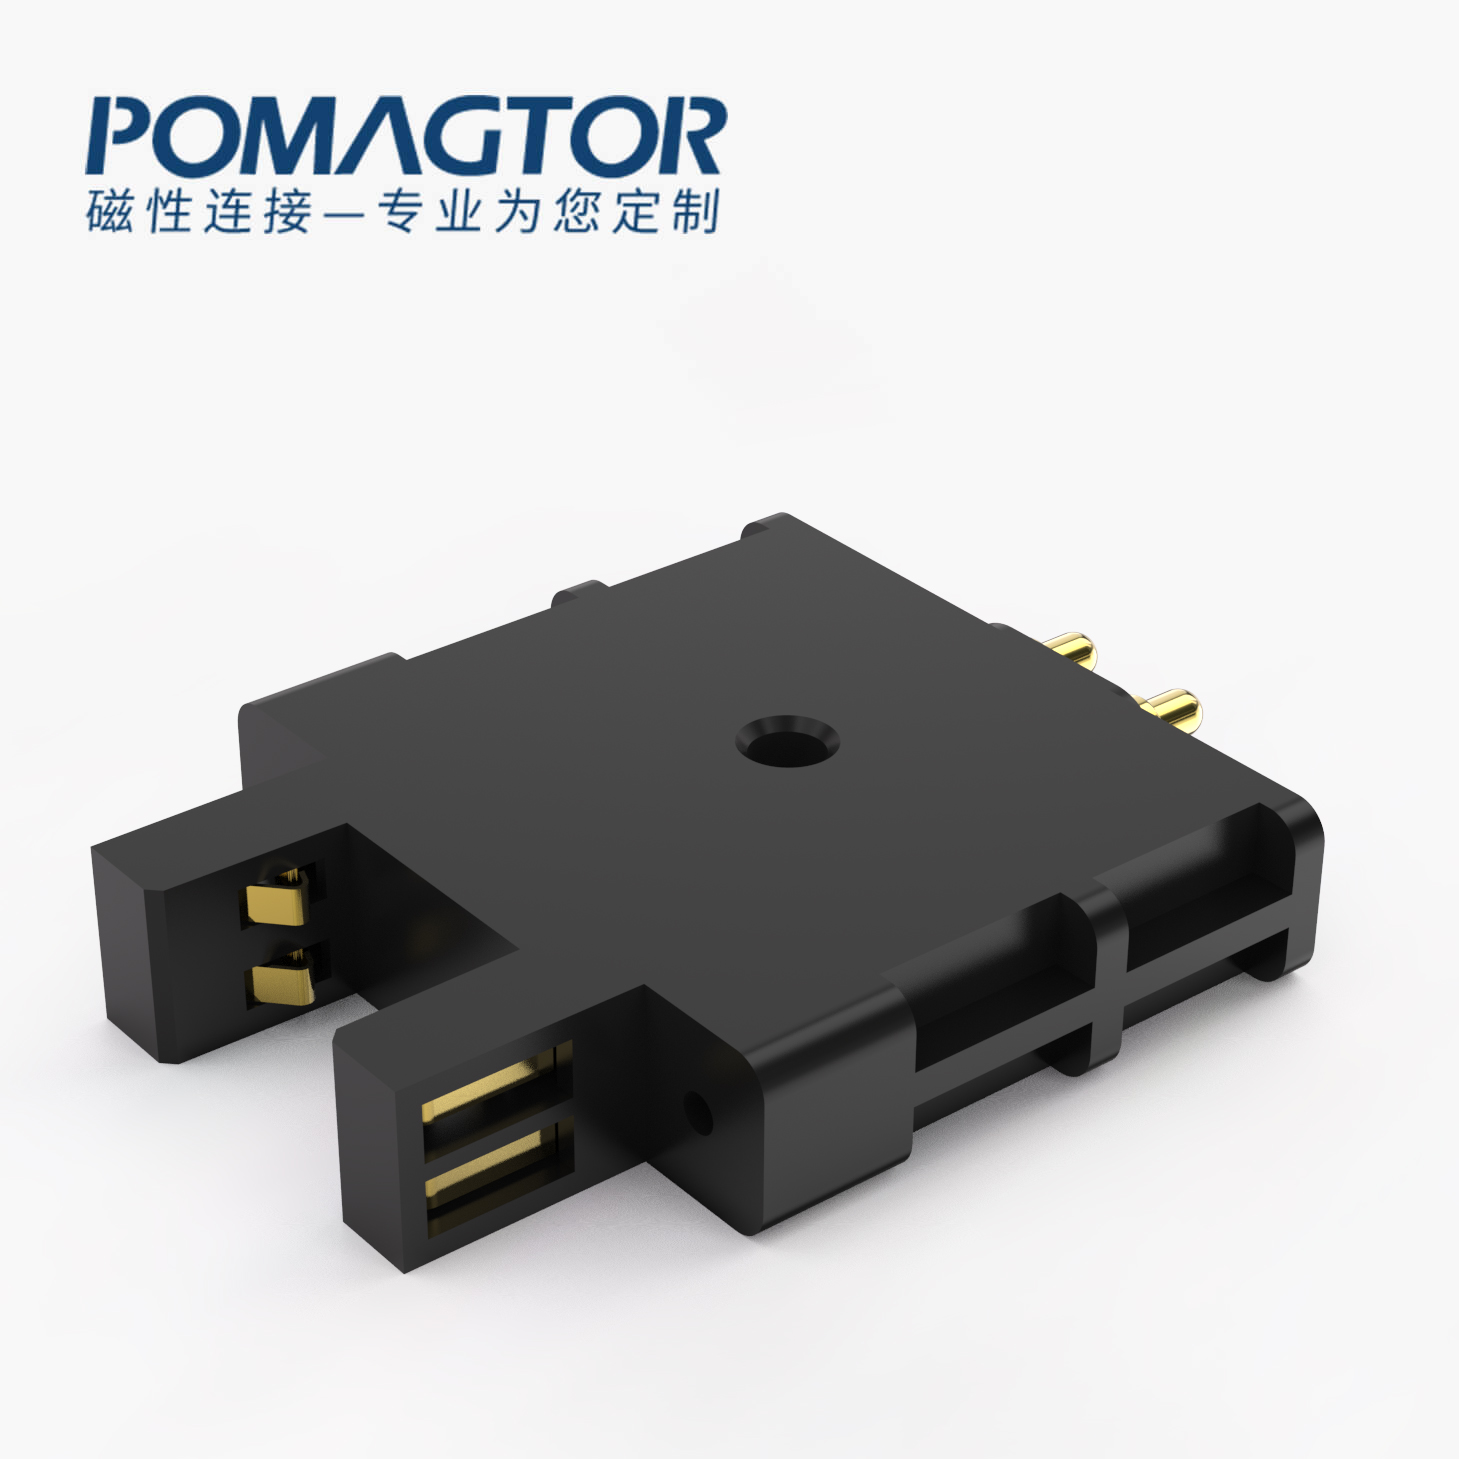 POGO PIN连接器 其他类：2PIN，电镀黄铜Au5u，电压12V，电流4A，工作行程2.5mm:80gfMax，弹力10000次+，工作温度-30°~85°